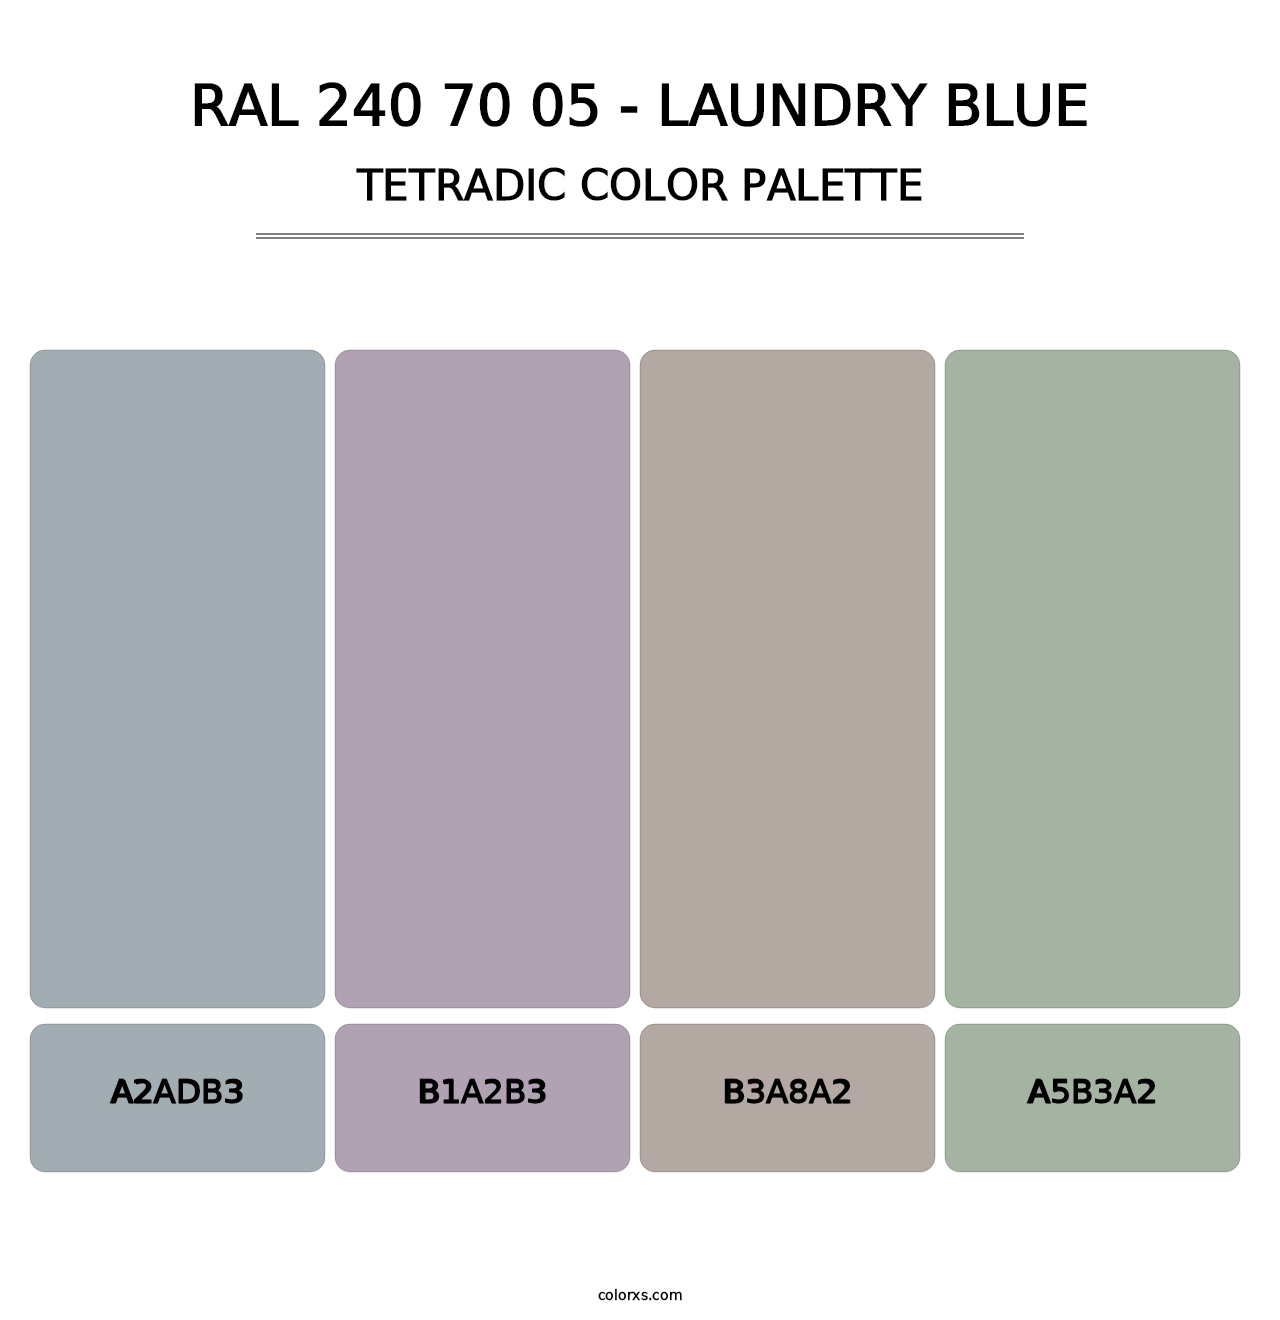 RAL 240 70 05 - Laundry Blue - Tetradic Color Palette